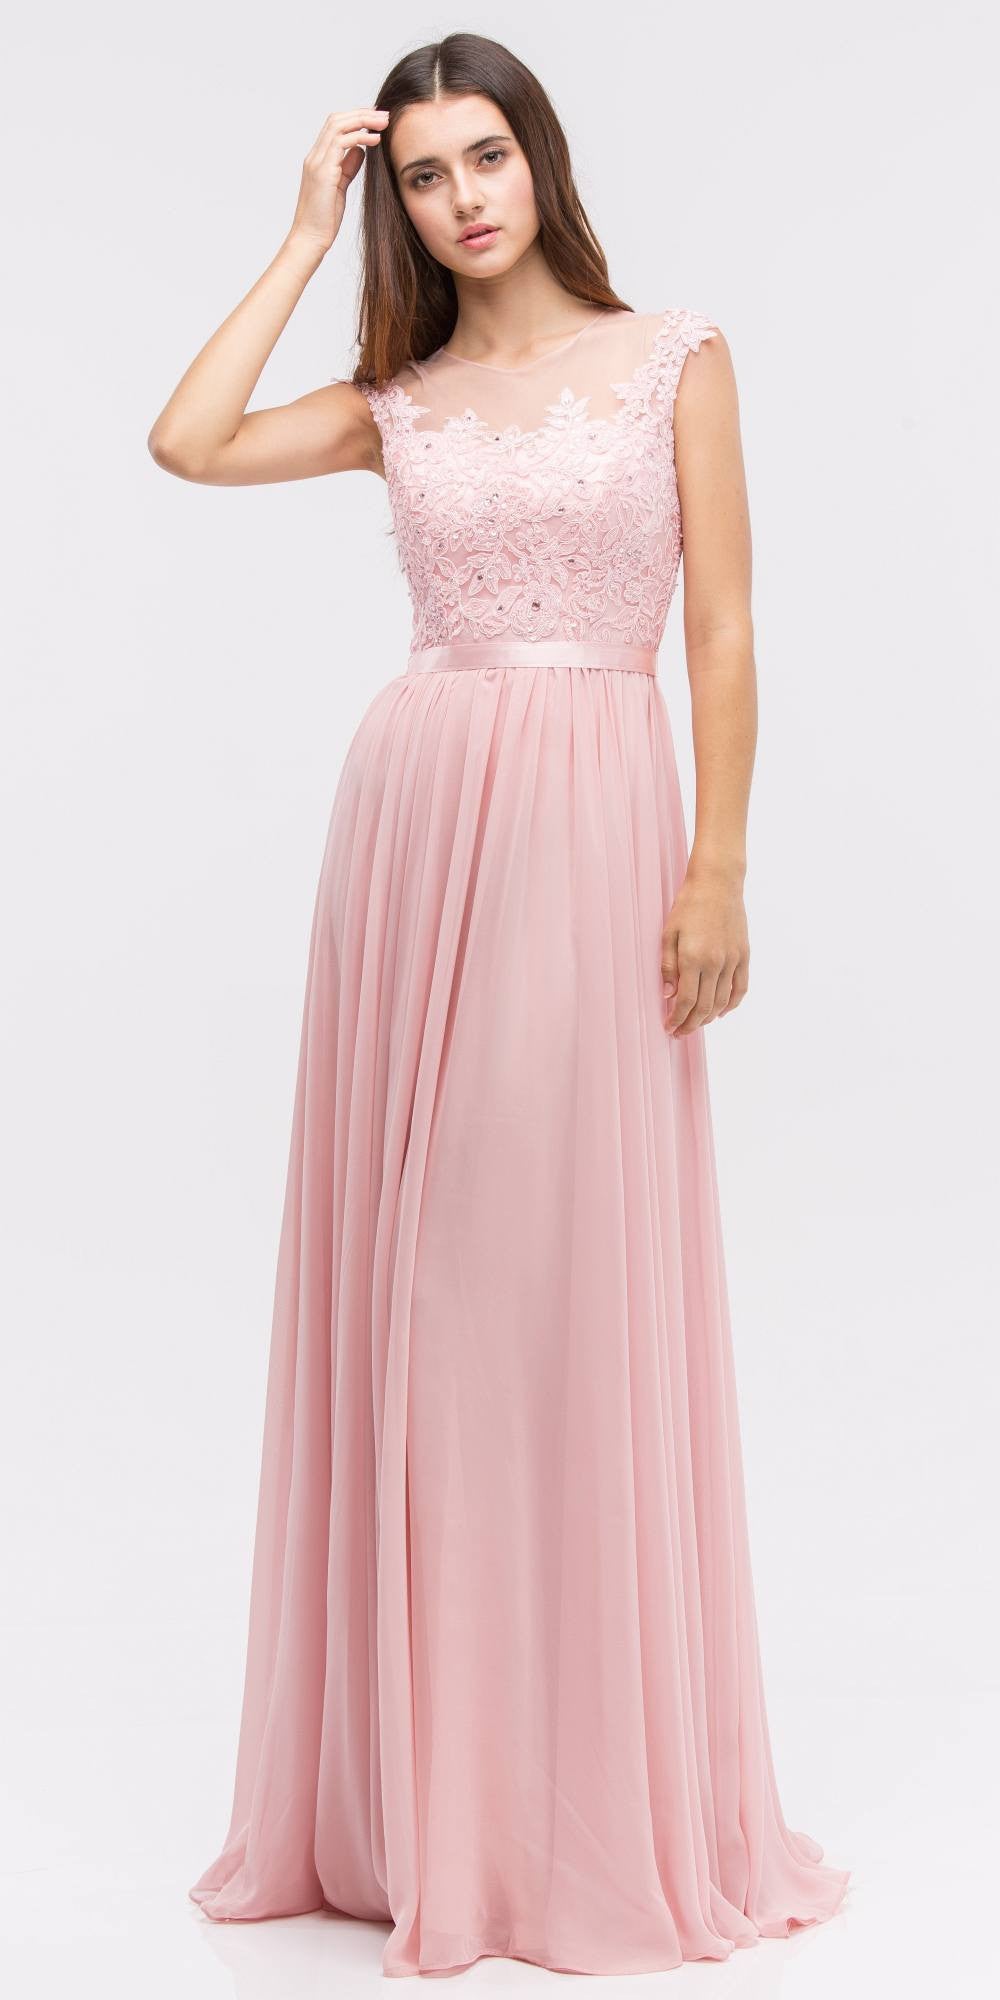 Lace Illusion Bodice Bateau Neck A-line Long Dress Dusty-Pink